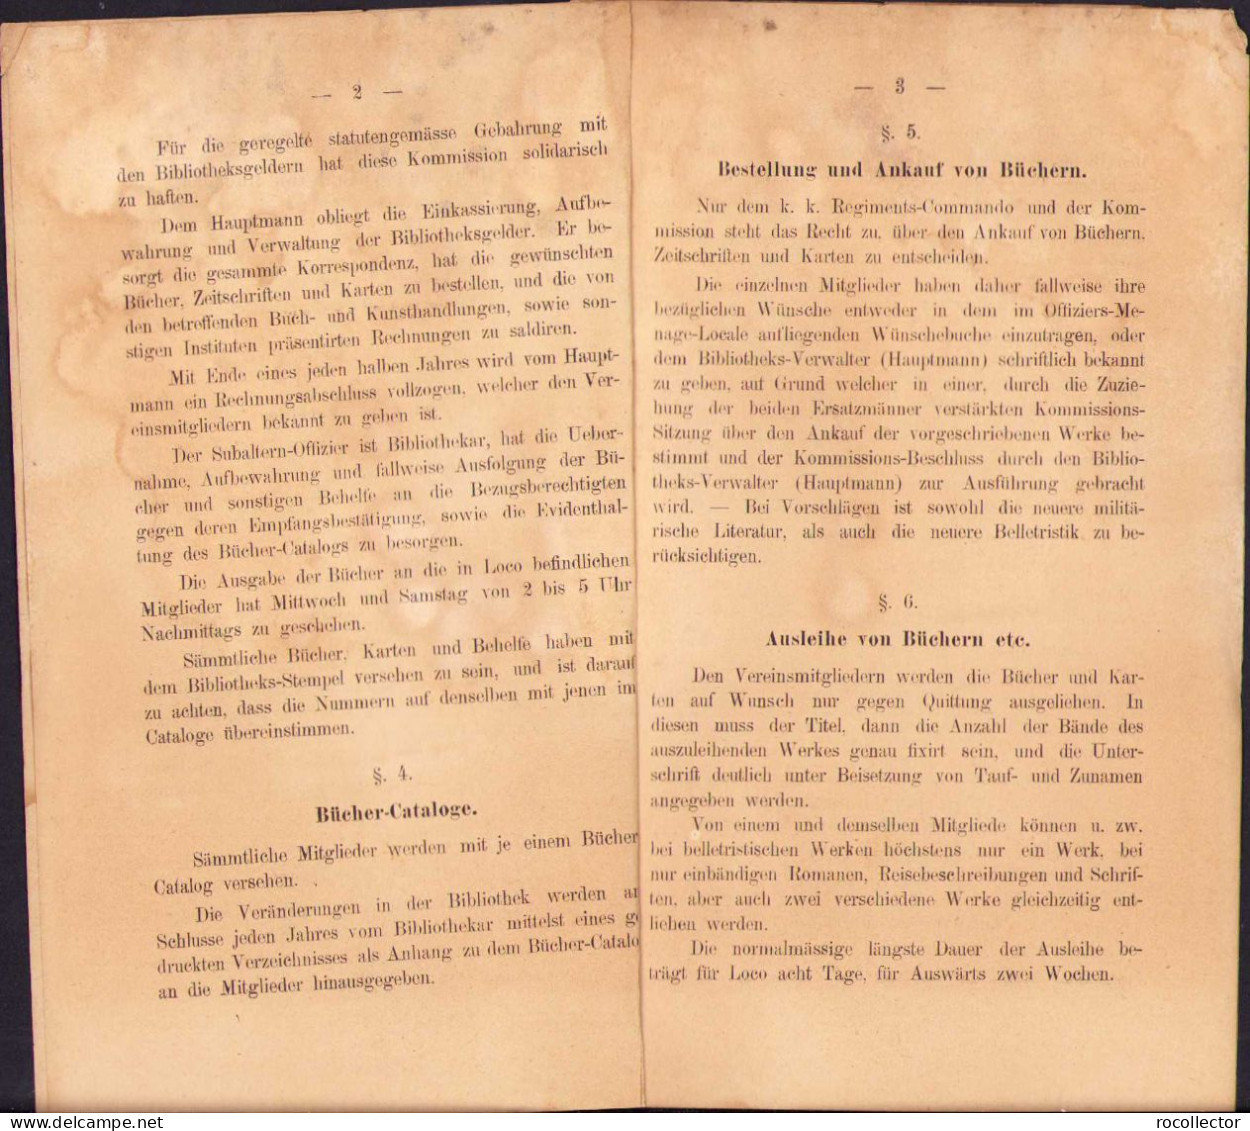 Statuten Für Die Offiziers-Bibliotek Des Infanterie-Regiments Nr. 43 Karansebes 1887 C1110 - Oude Boeken